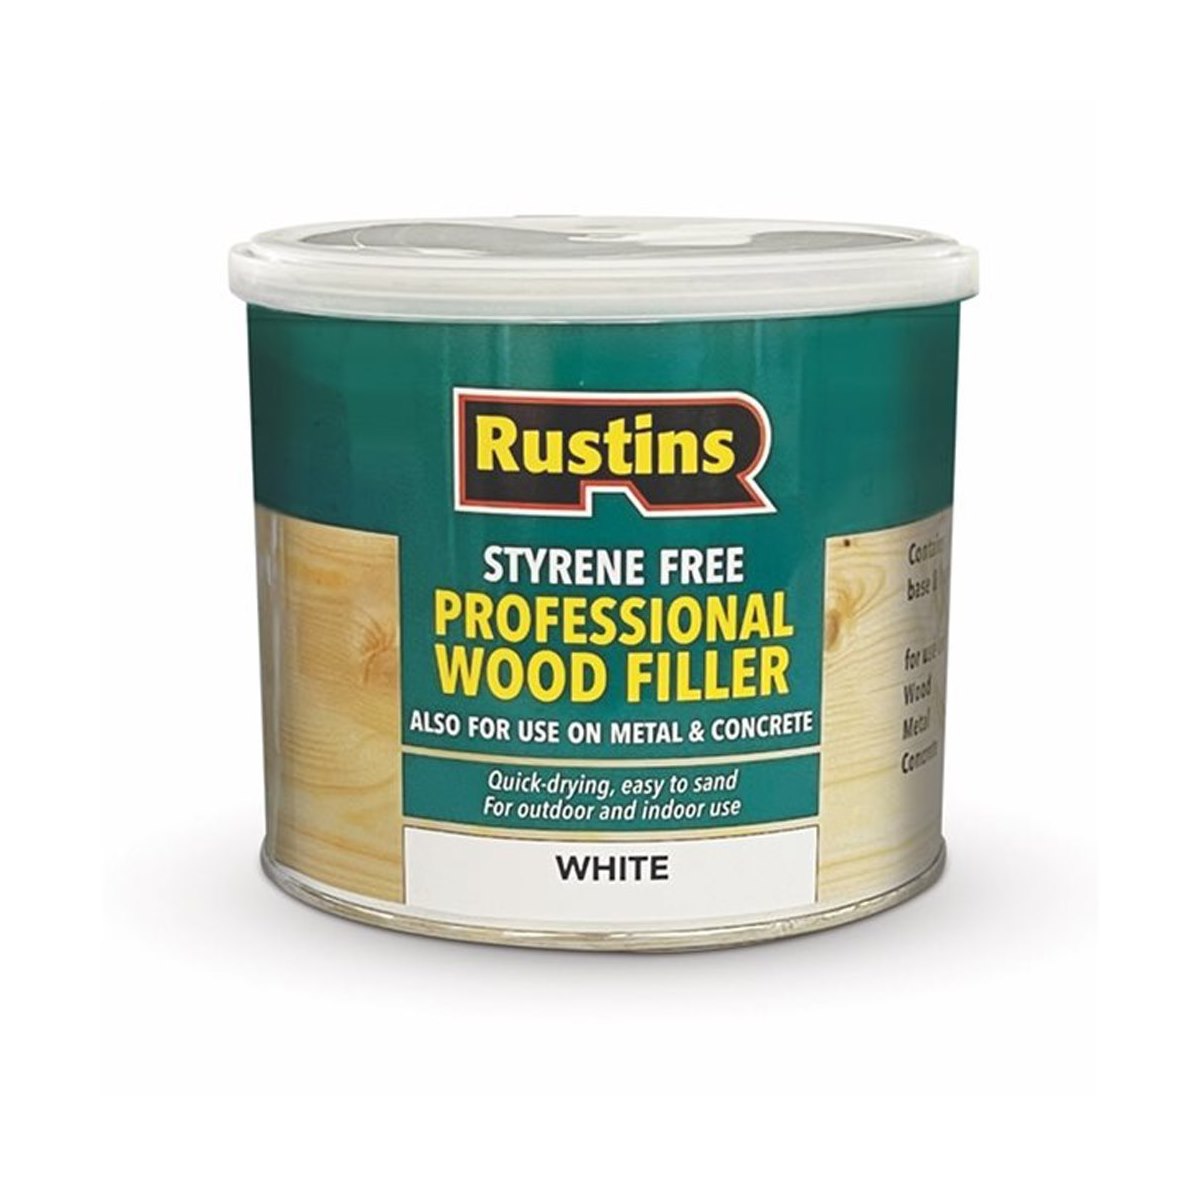 Rustins Styrene Free Professional Wood Filler White 1kg